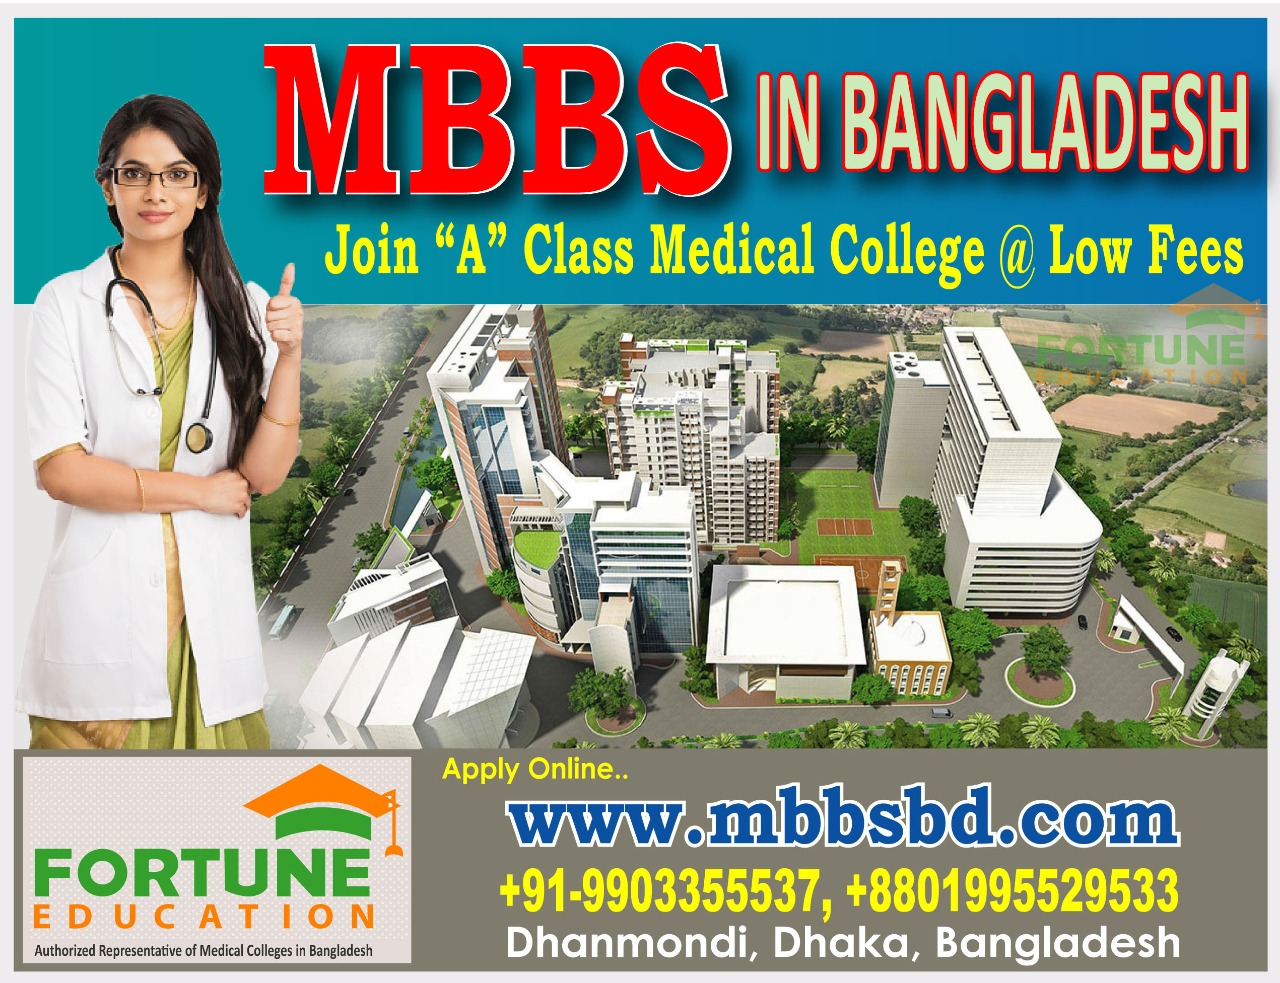 MBBS Program in Bangladesh for International Students